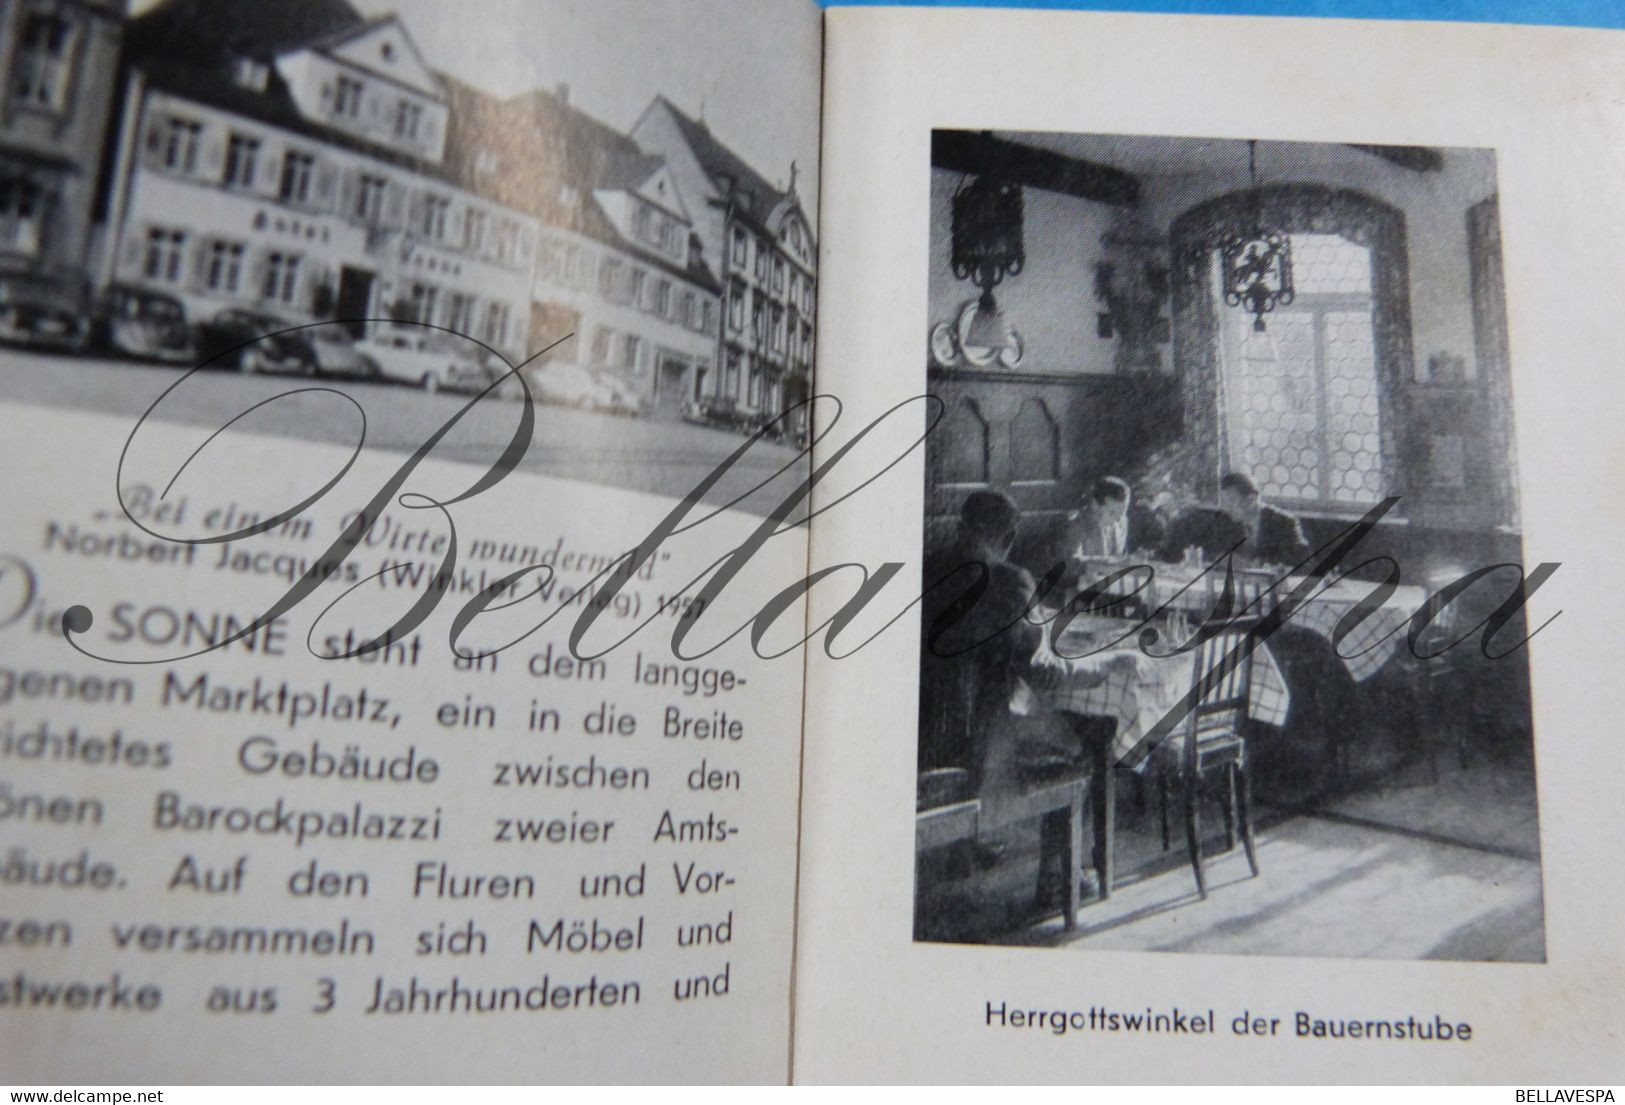 Offenburg - Propr. Besitser  Karl Schimph Hotel Sonne - Petite Livre 16 Pages.- - Plakate